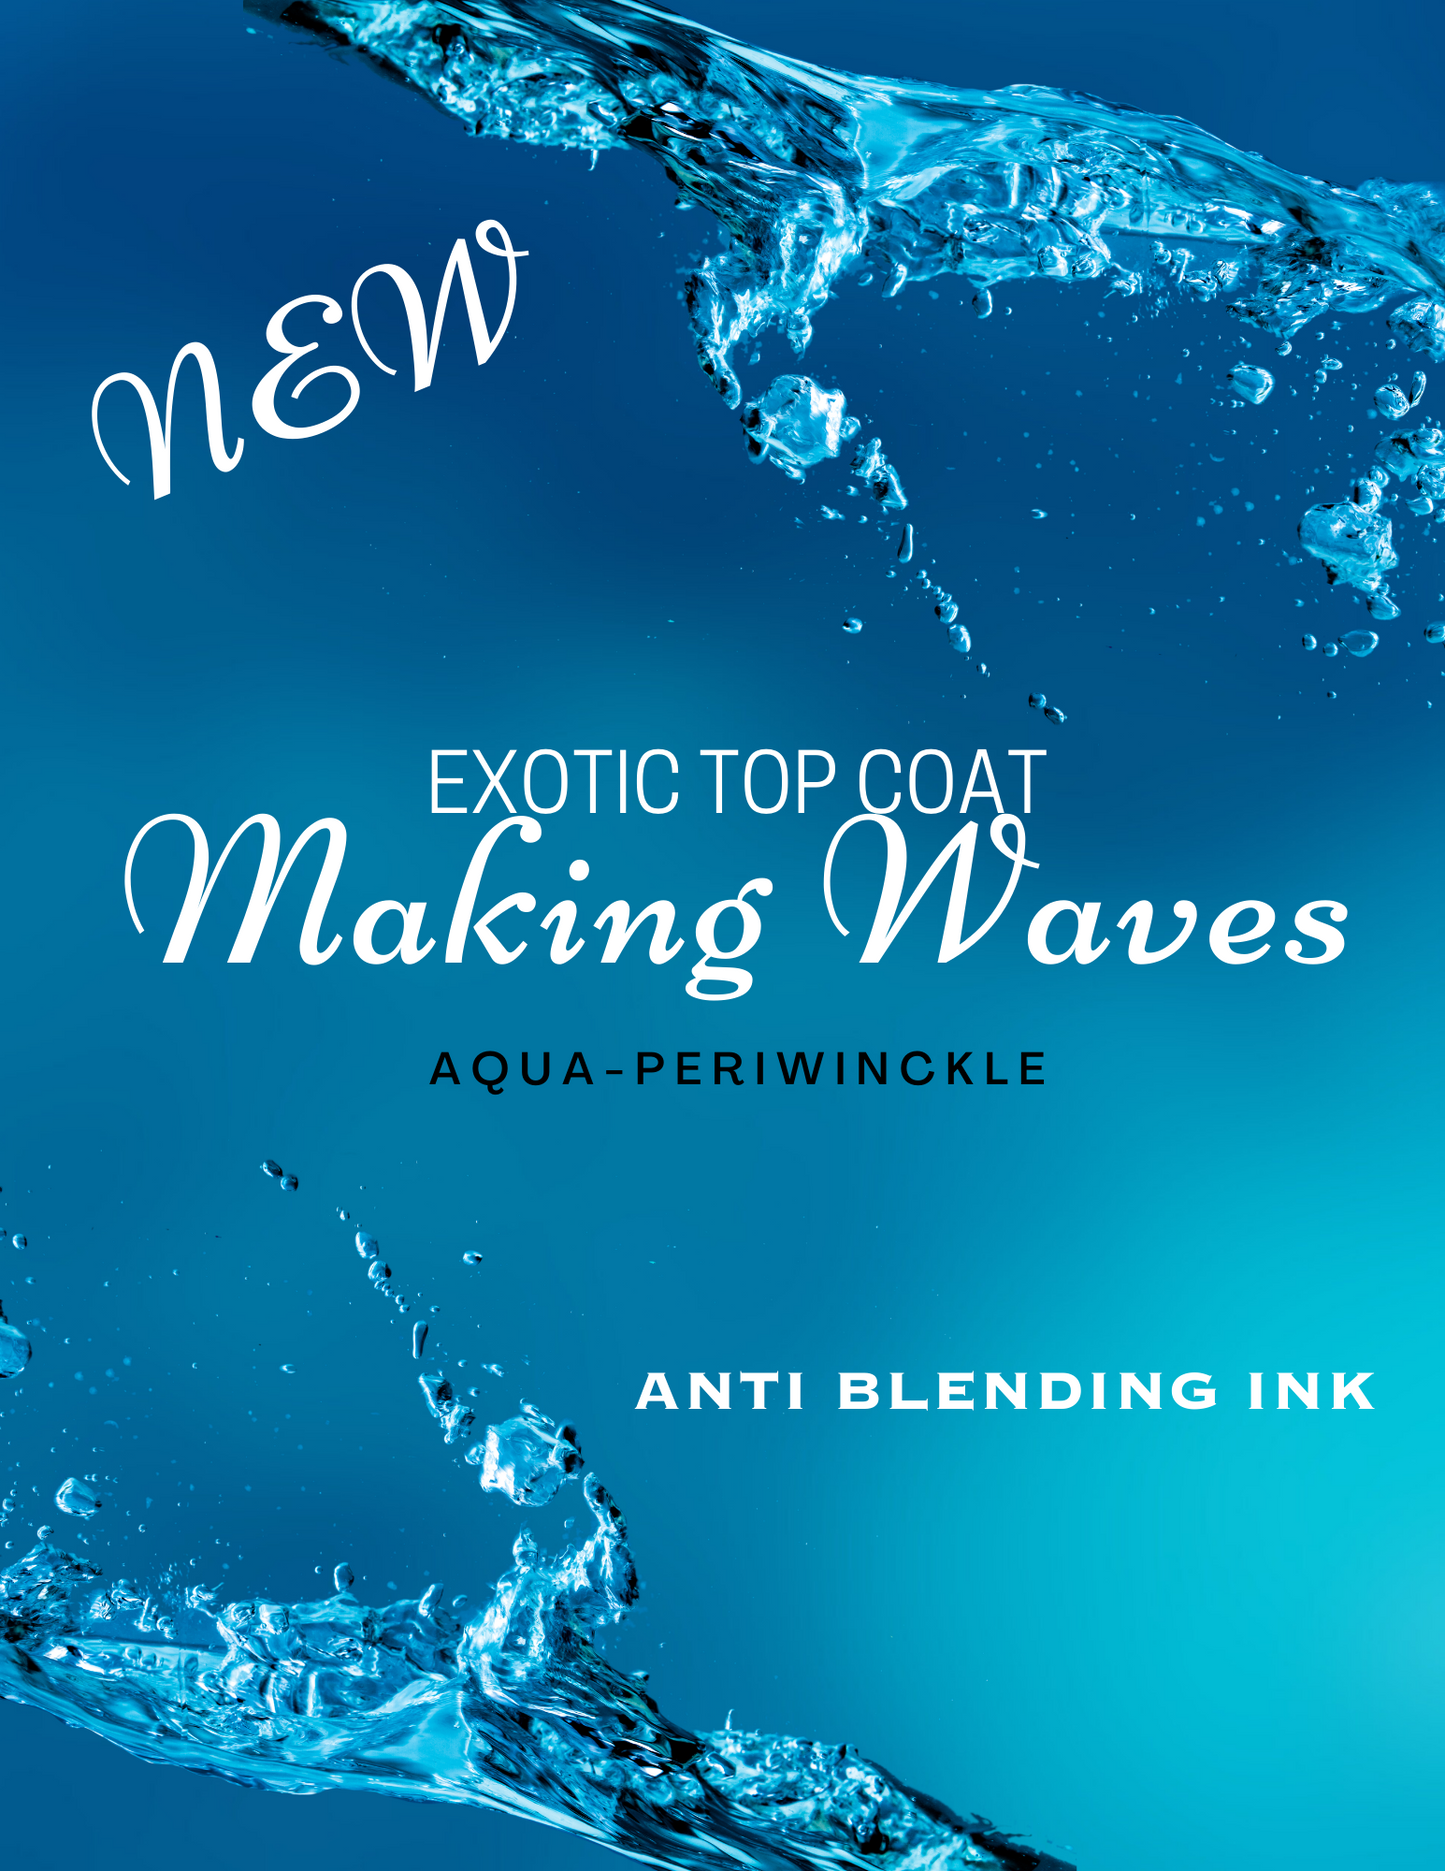 Making Waves Exotic Top Coat